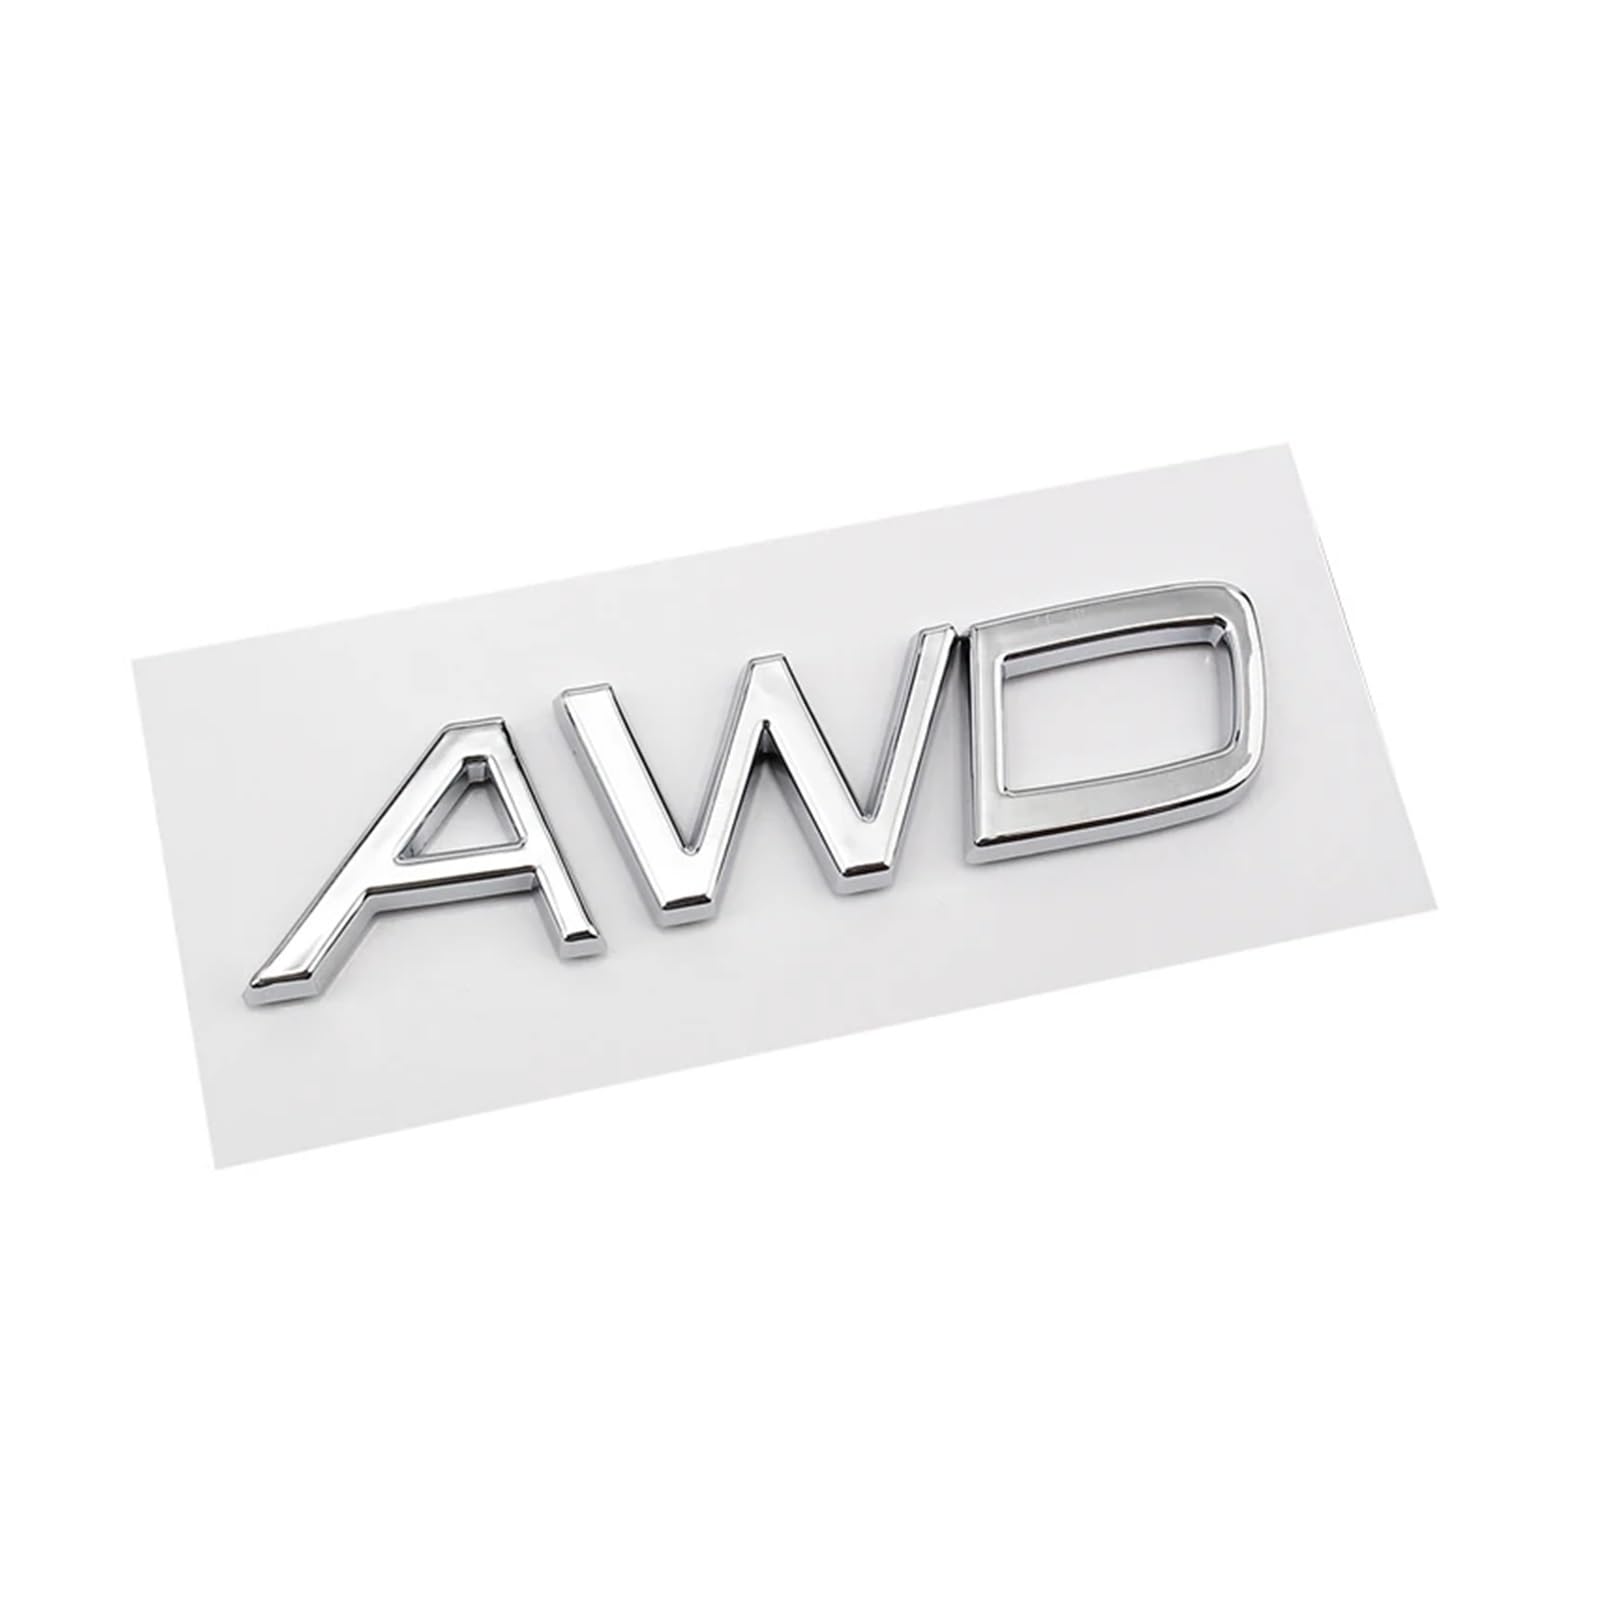 AQXYWQOL Auto ABS Verschiebung Logo Ersetzen Abzeichen Emblem Aufkleber Aufkleber Kompatibel mit S60 S80 S90 XC90 XC60 V40 V70 V60 T3 T4 T5 T6 T8 V8 AWD Farbe ist konstant, verblasst nicht und beschäd von AQXYWQOL